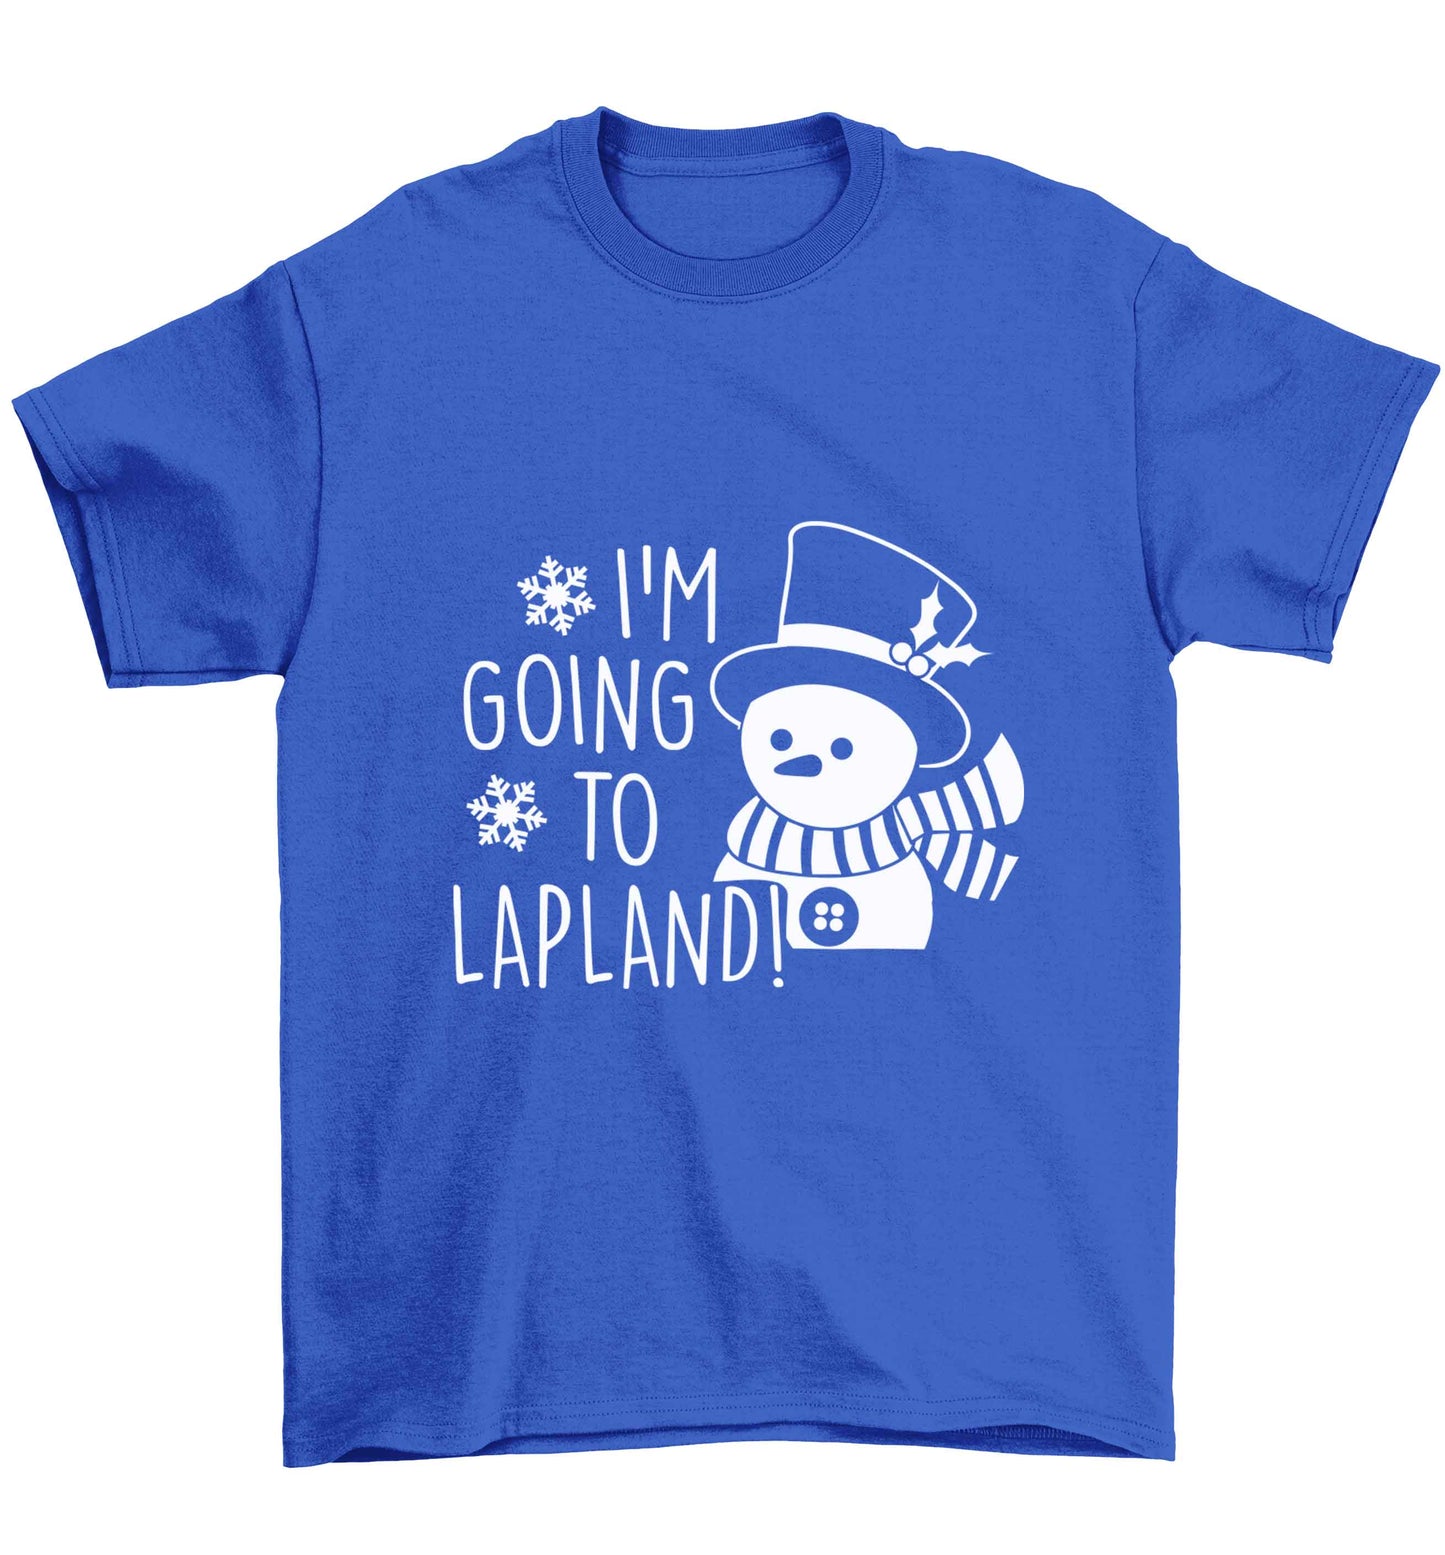 I'm going to Lapland Children's blue Tshirt 12-13 Years